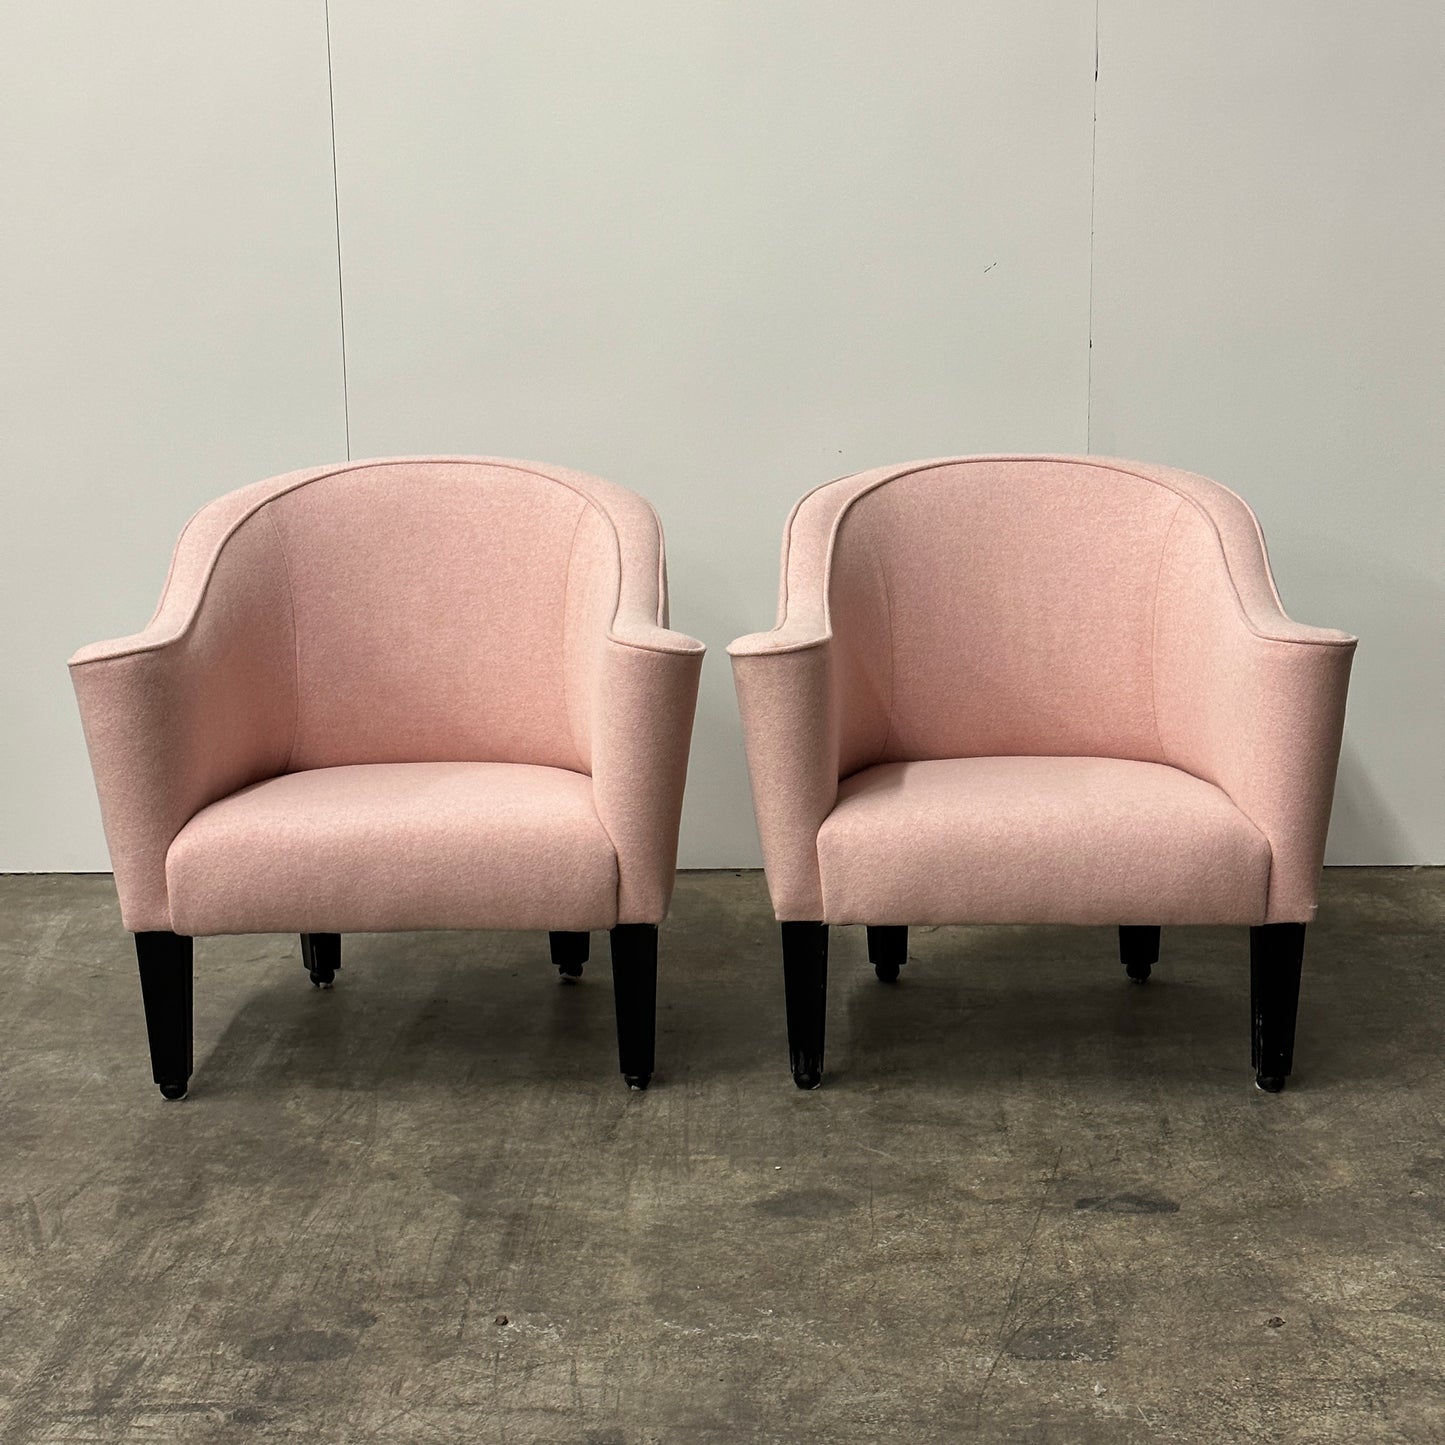 Villa Gallia Chairs by Josef Hoffman for Wittman